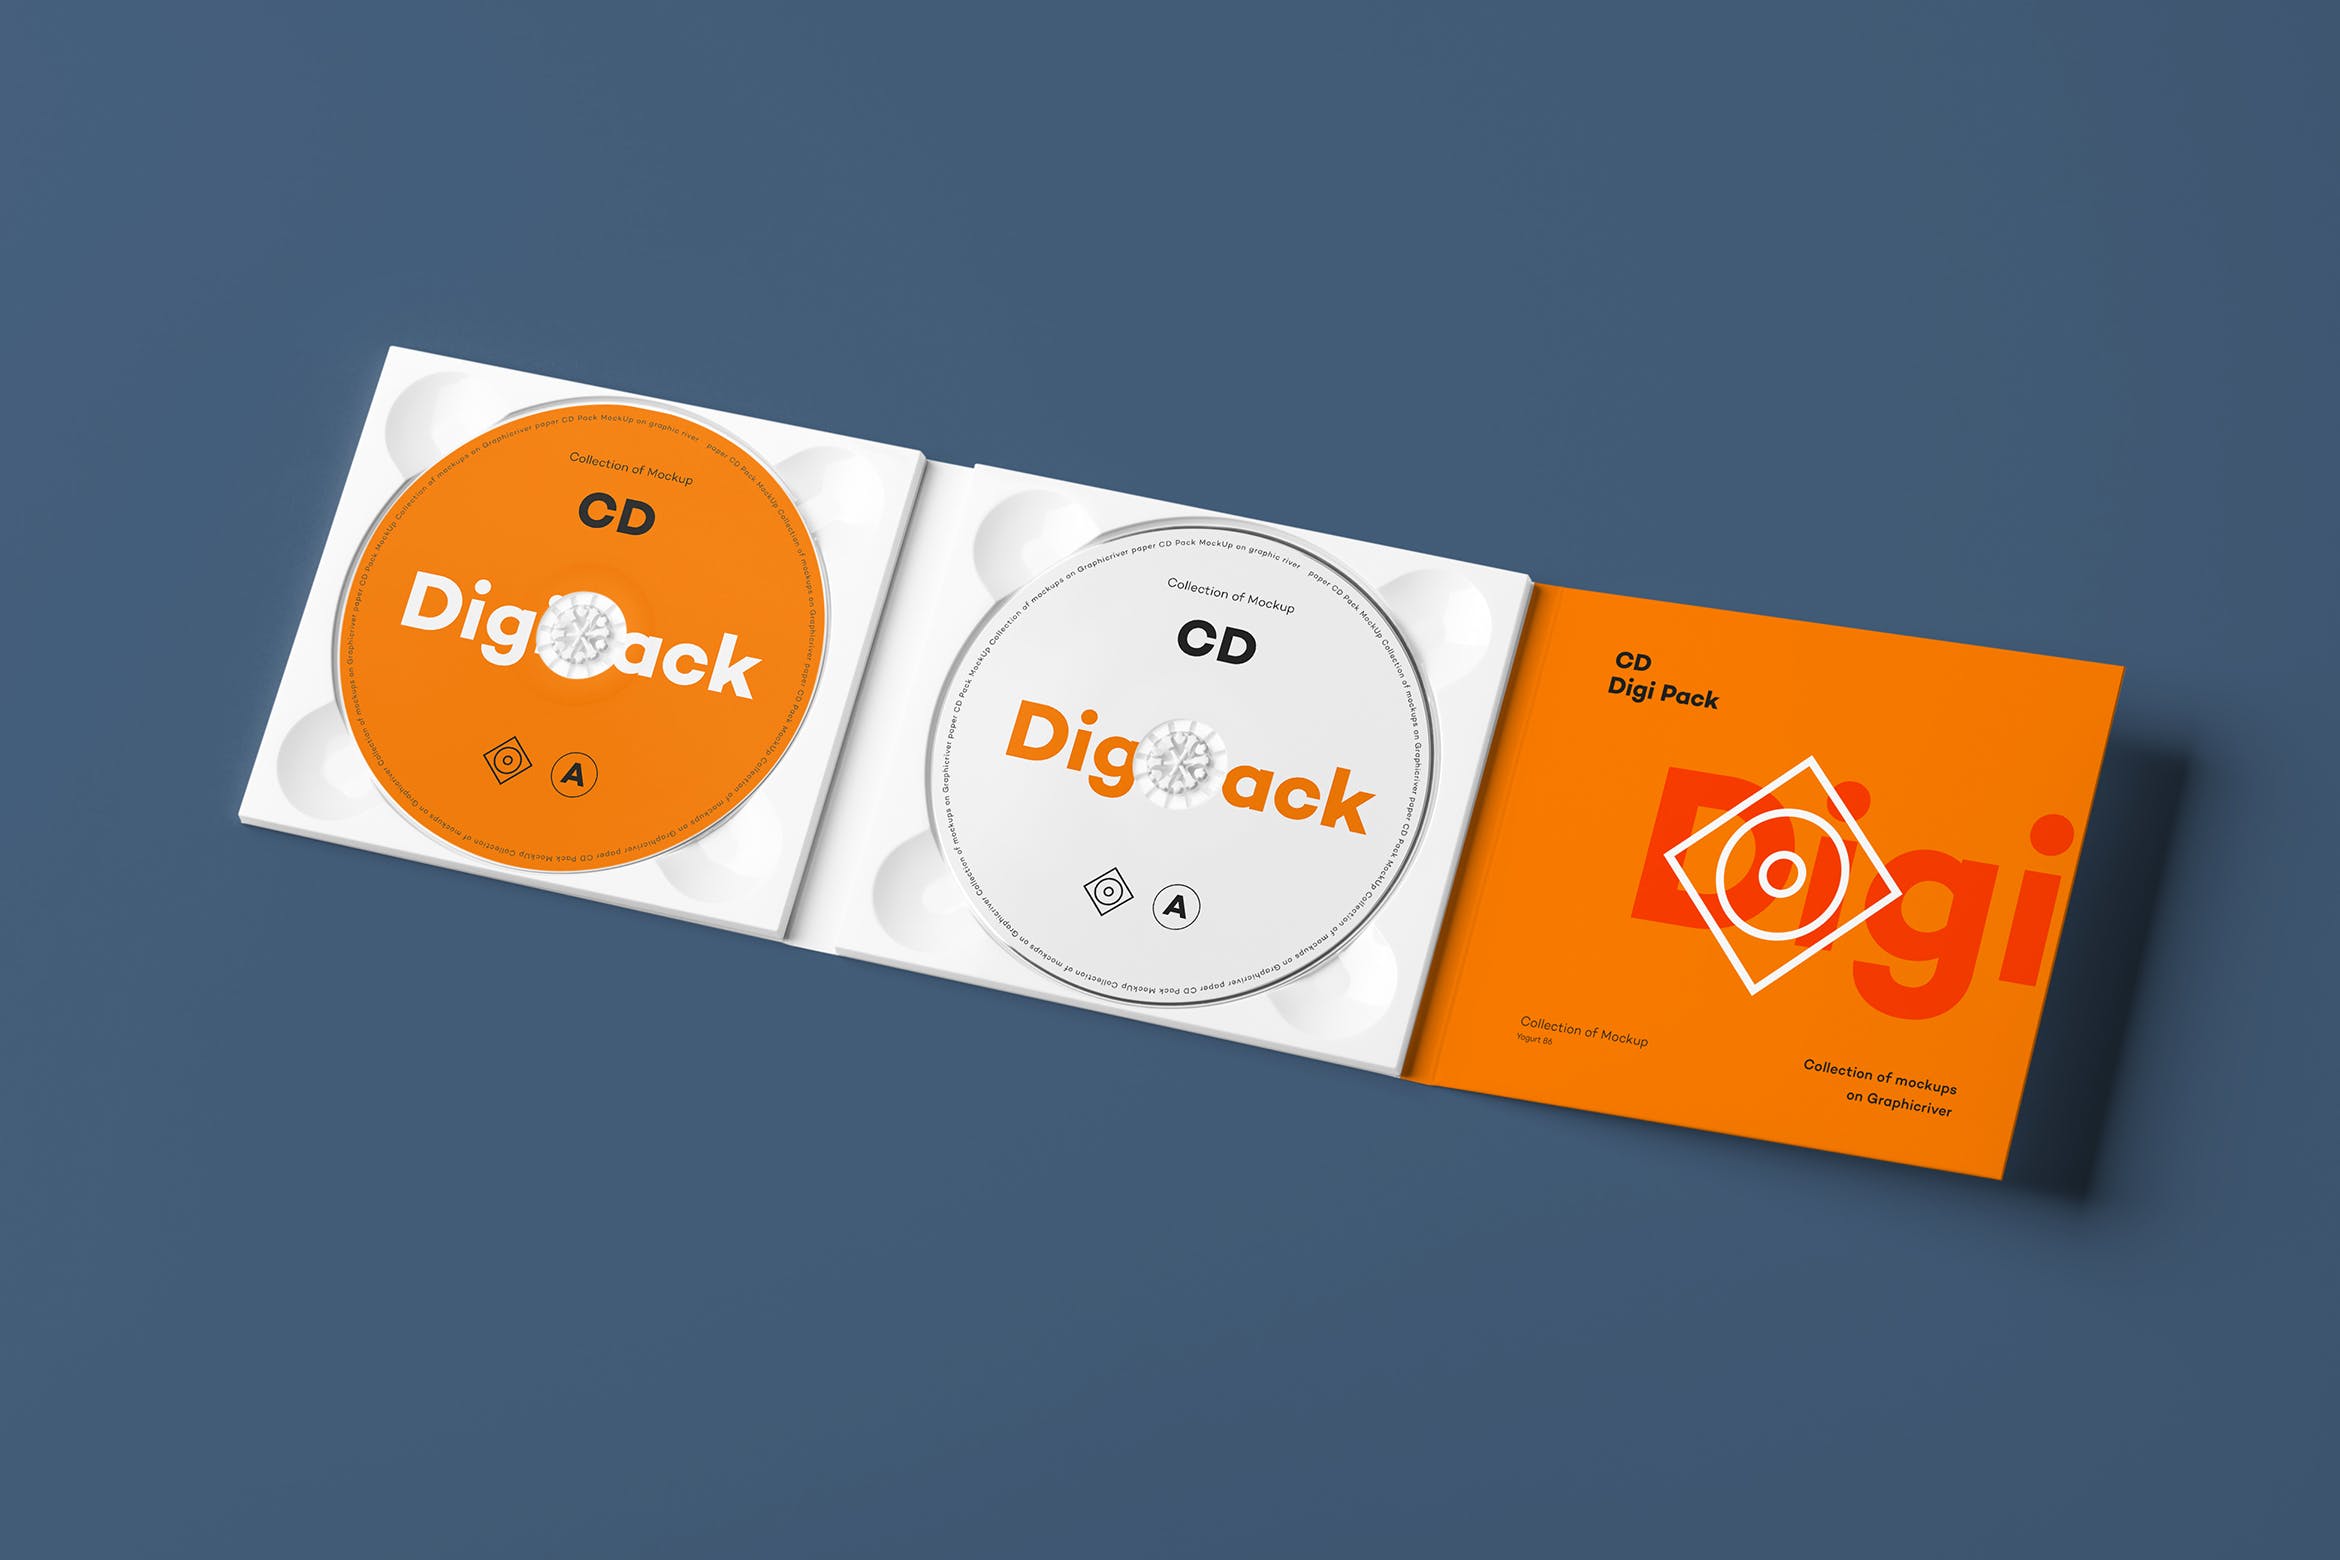 CD光碟封面&包装盒设计图非凡图库精选模板v8 CD Digi Pack Mock-up 8插图